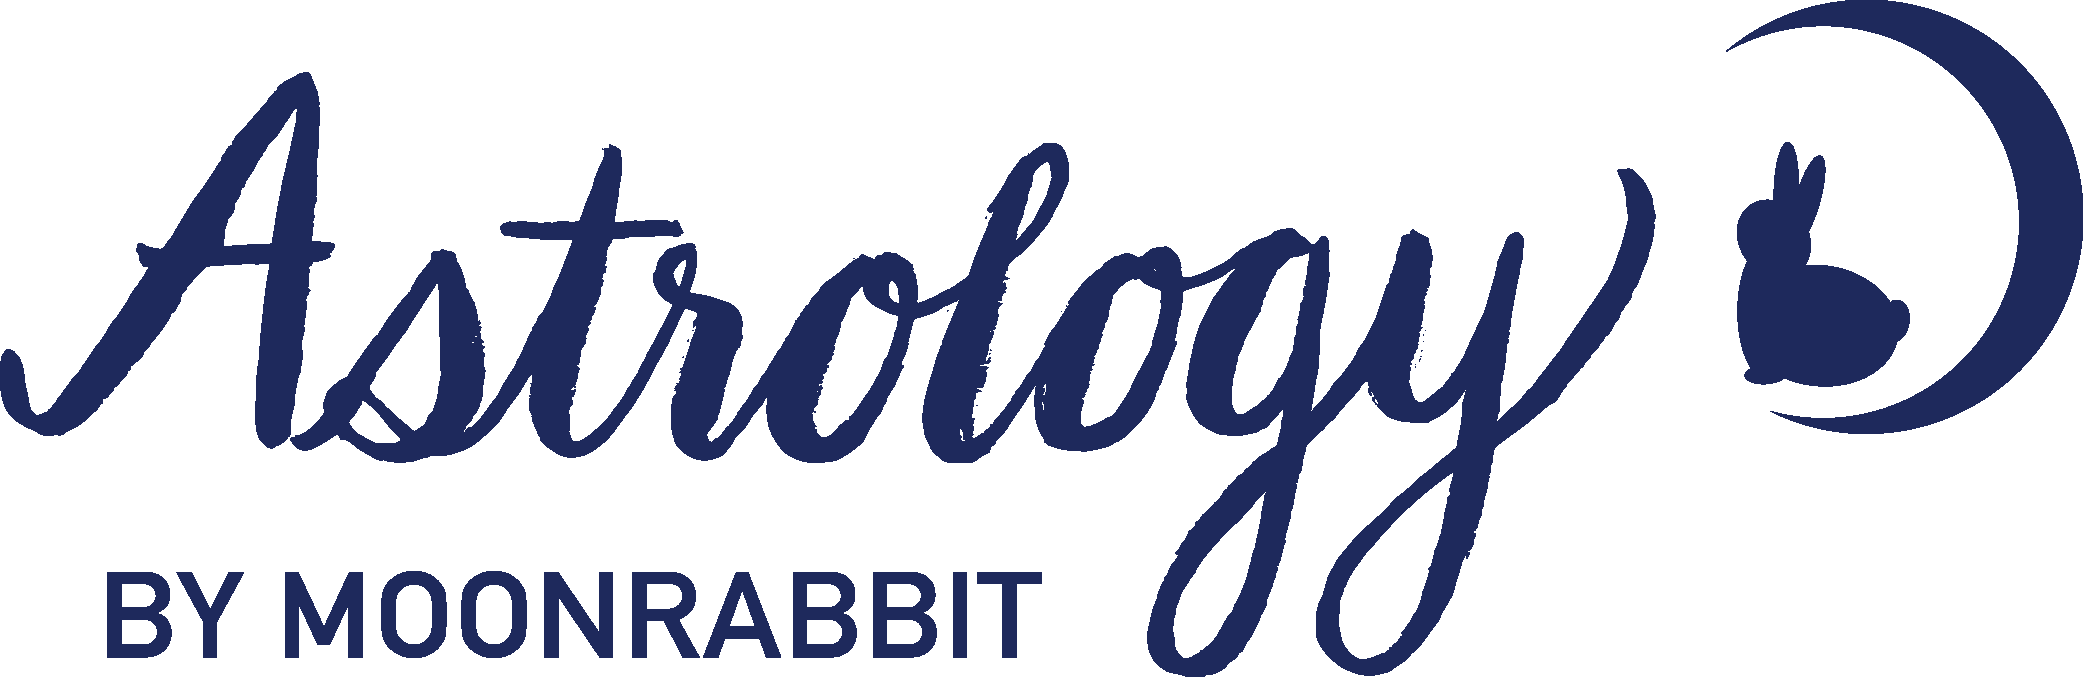 astrology by moonrabbit logo